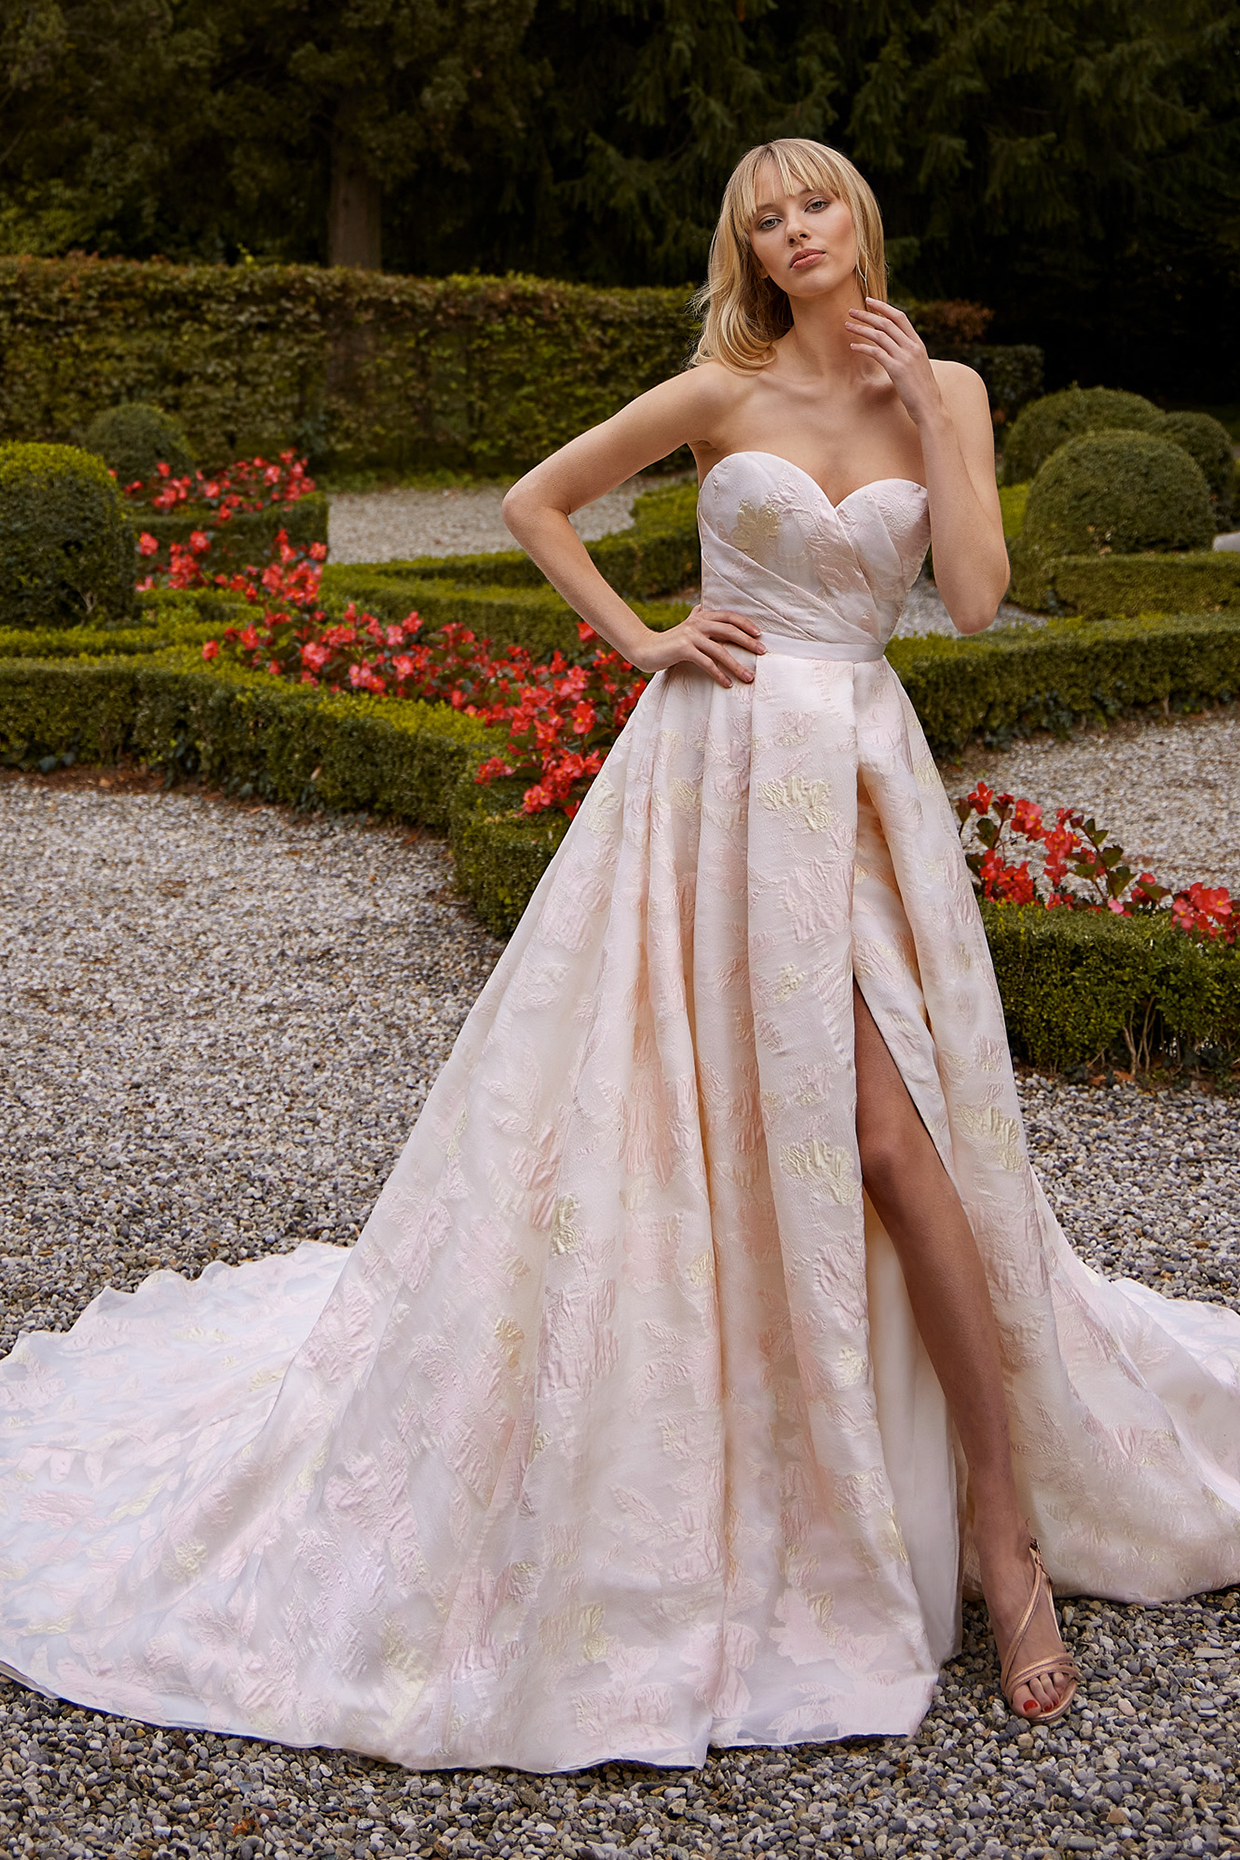 Wedding Dress PNG Images & PSDs for Download | PixelSquid - S111410675